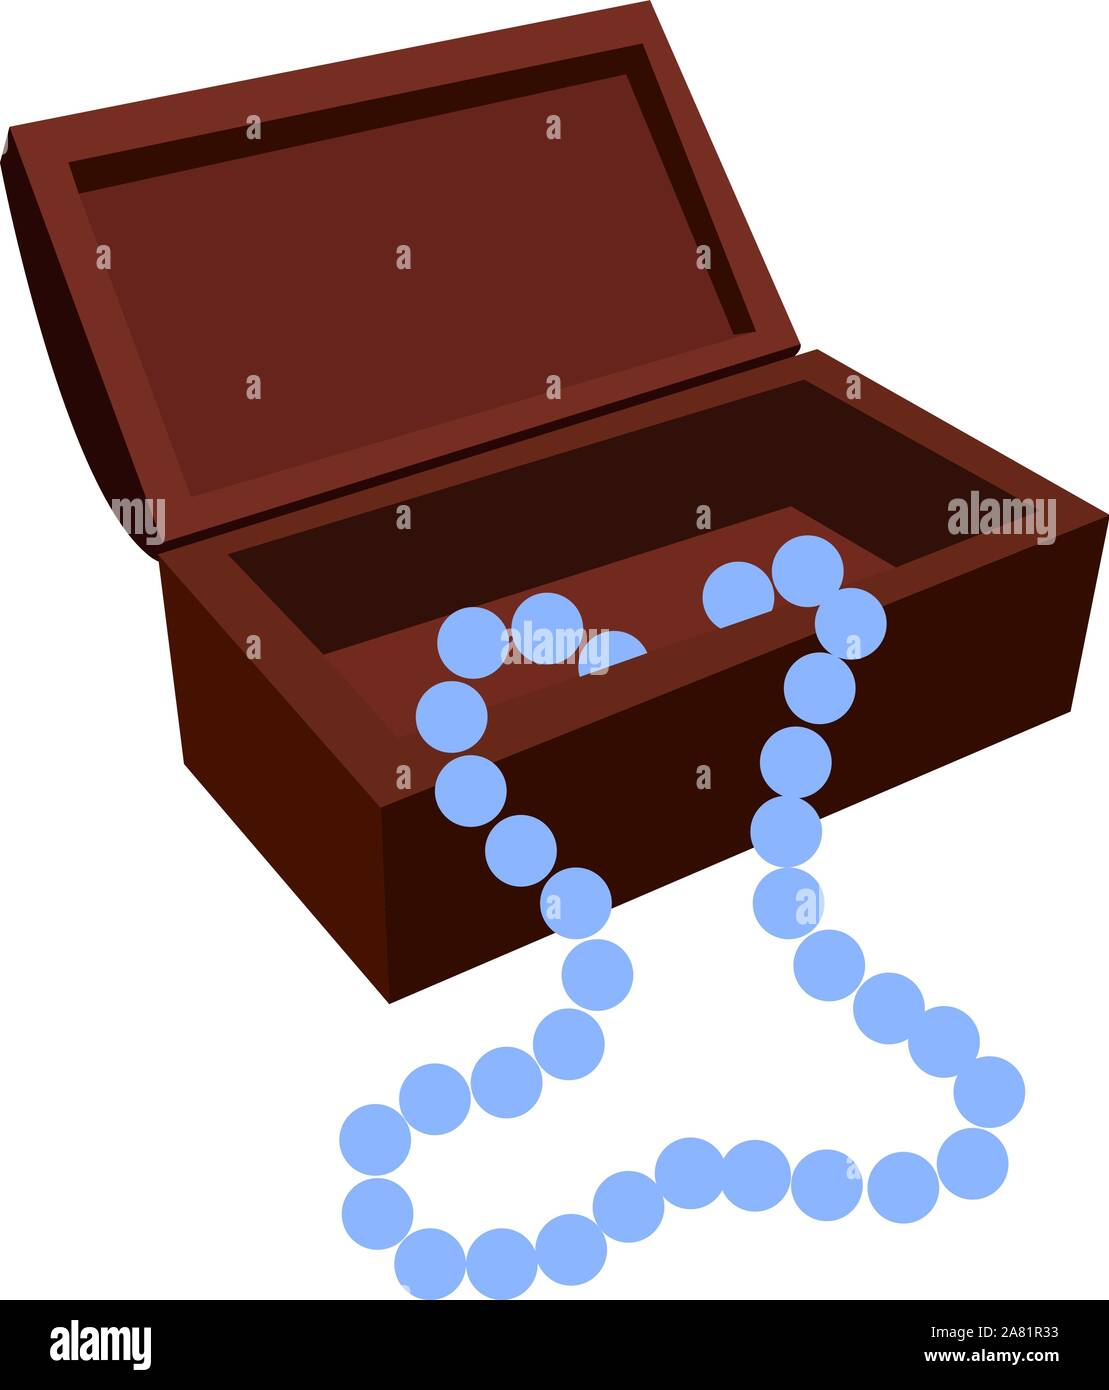 Wooden box, illustration, vector on white background. Stock Vector